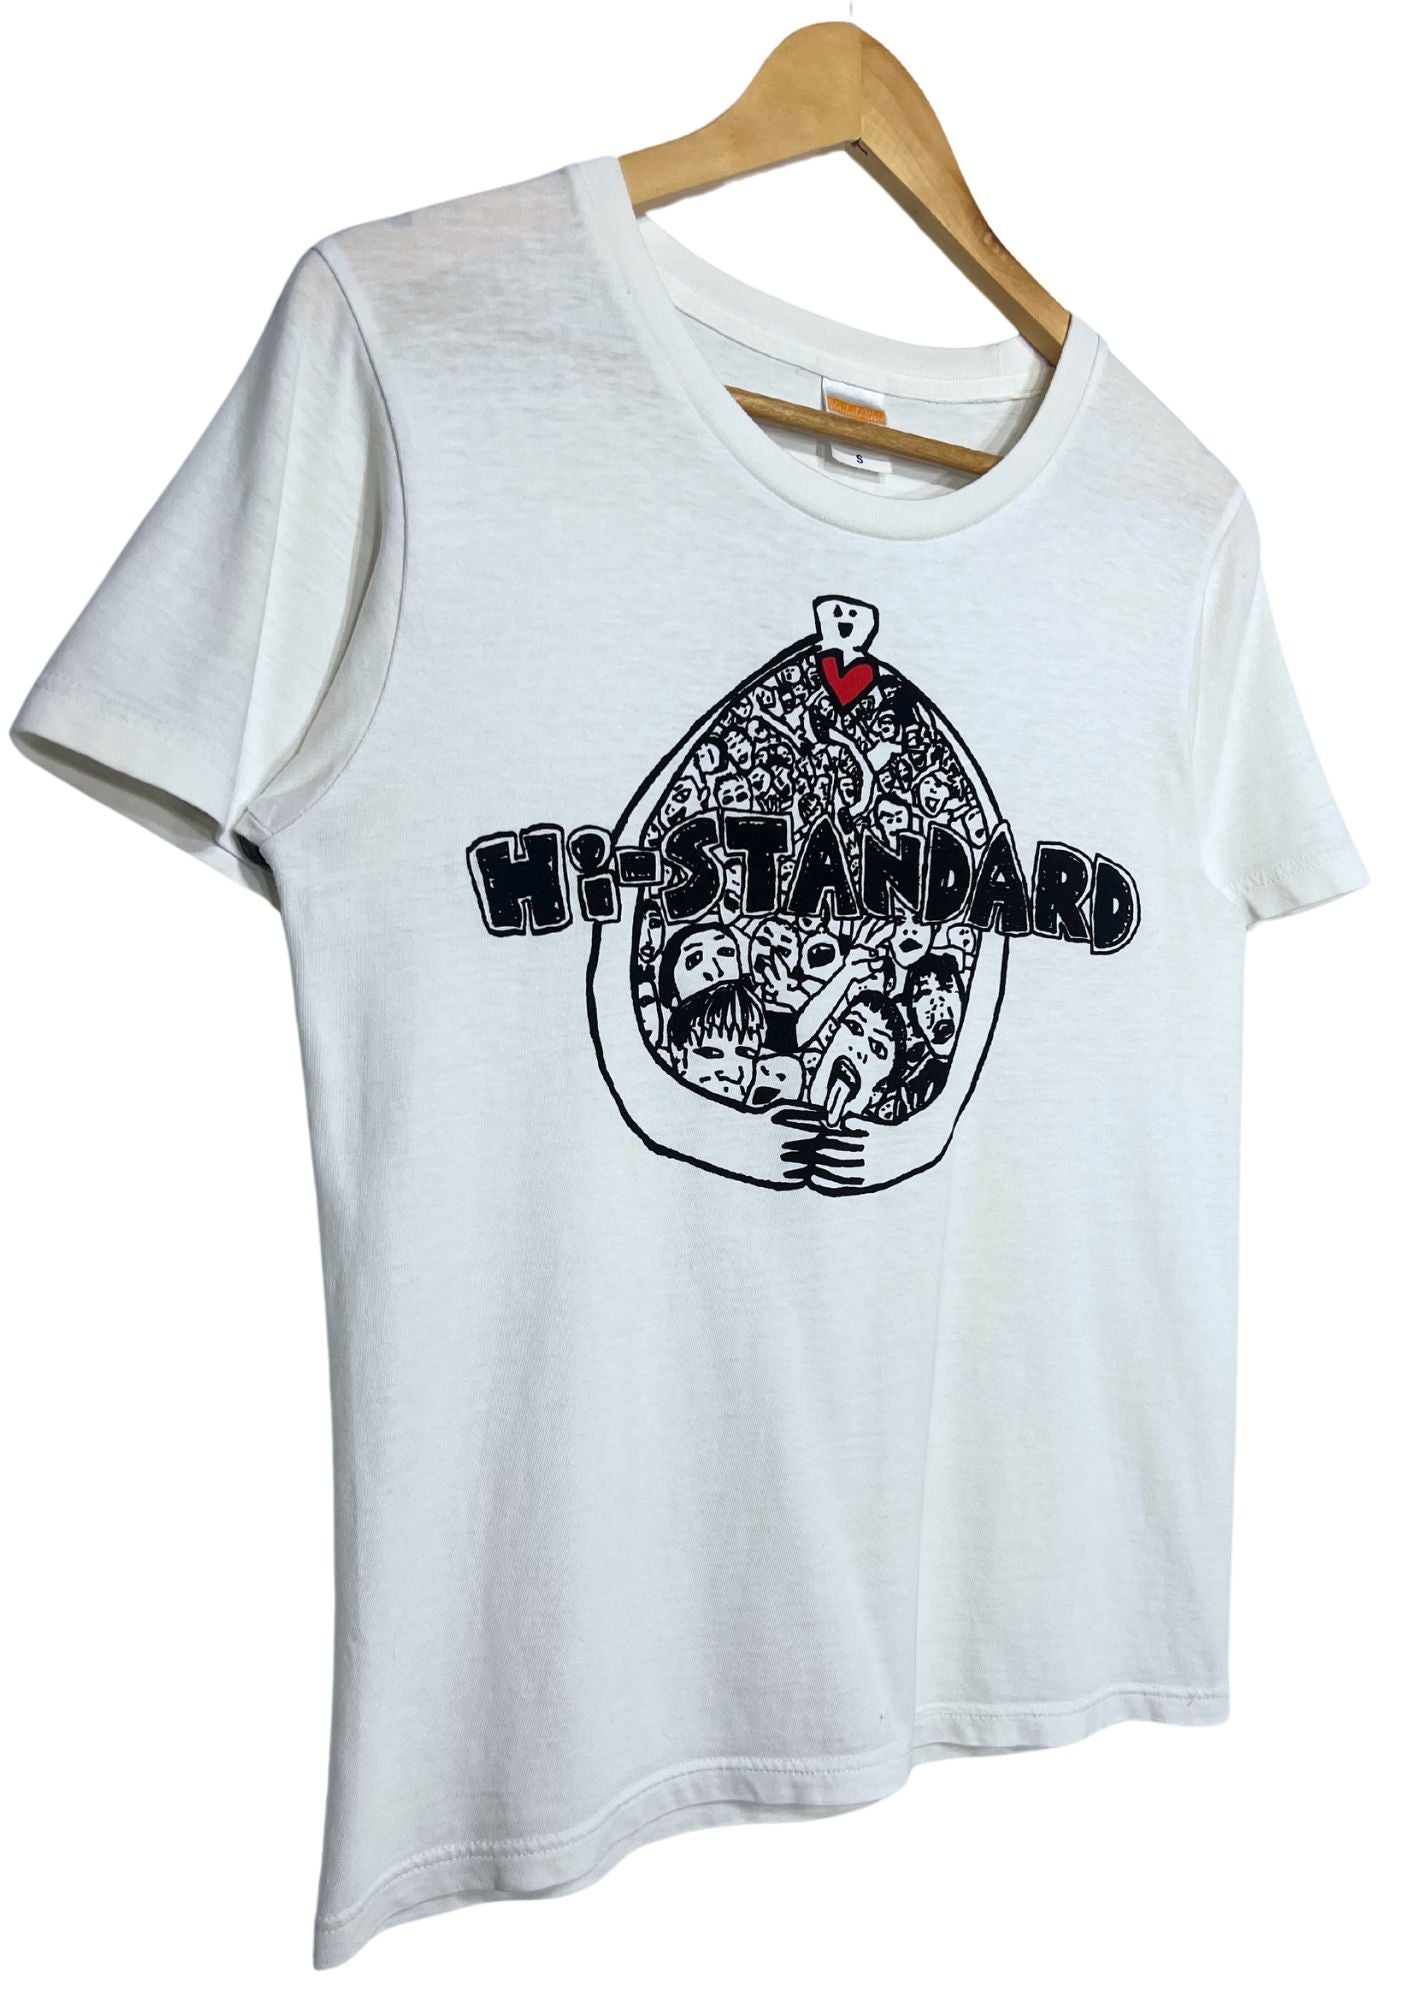 2010s HI-STANDARD 'Stay Gold' Japanese Punk Band T-shirt